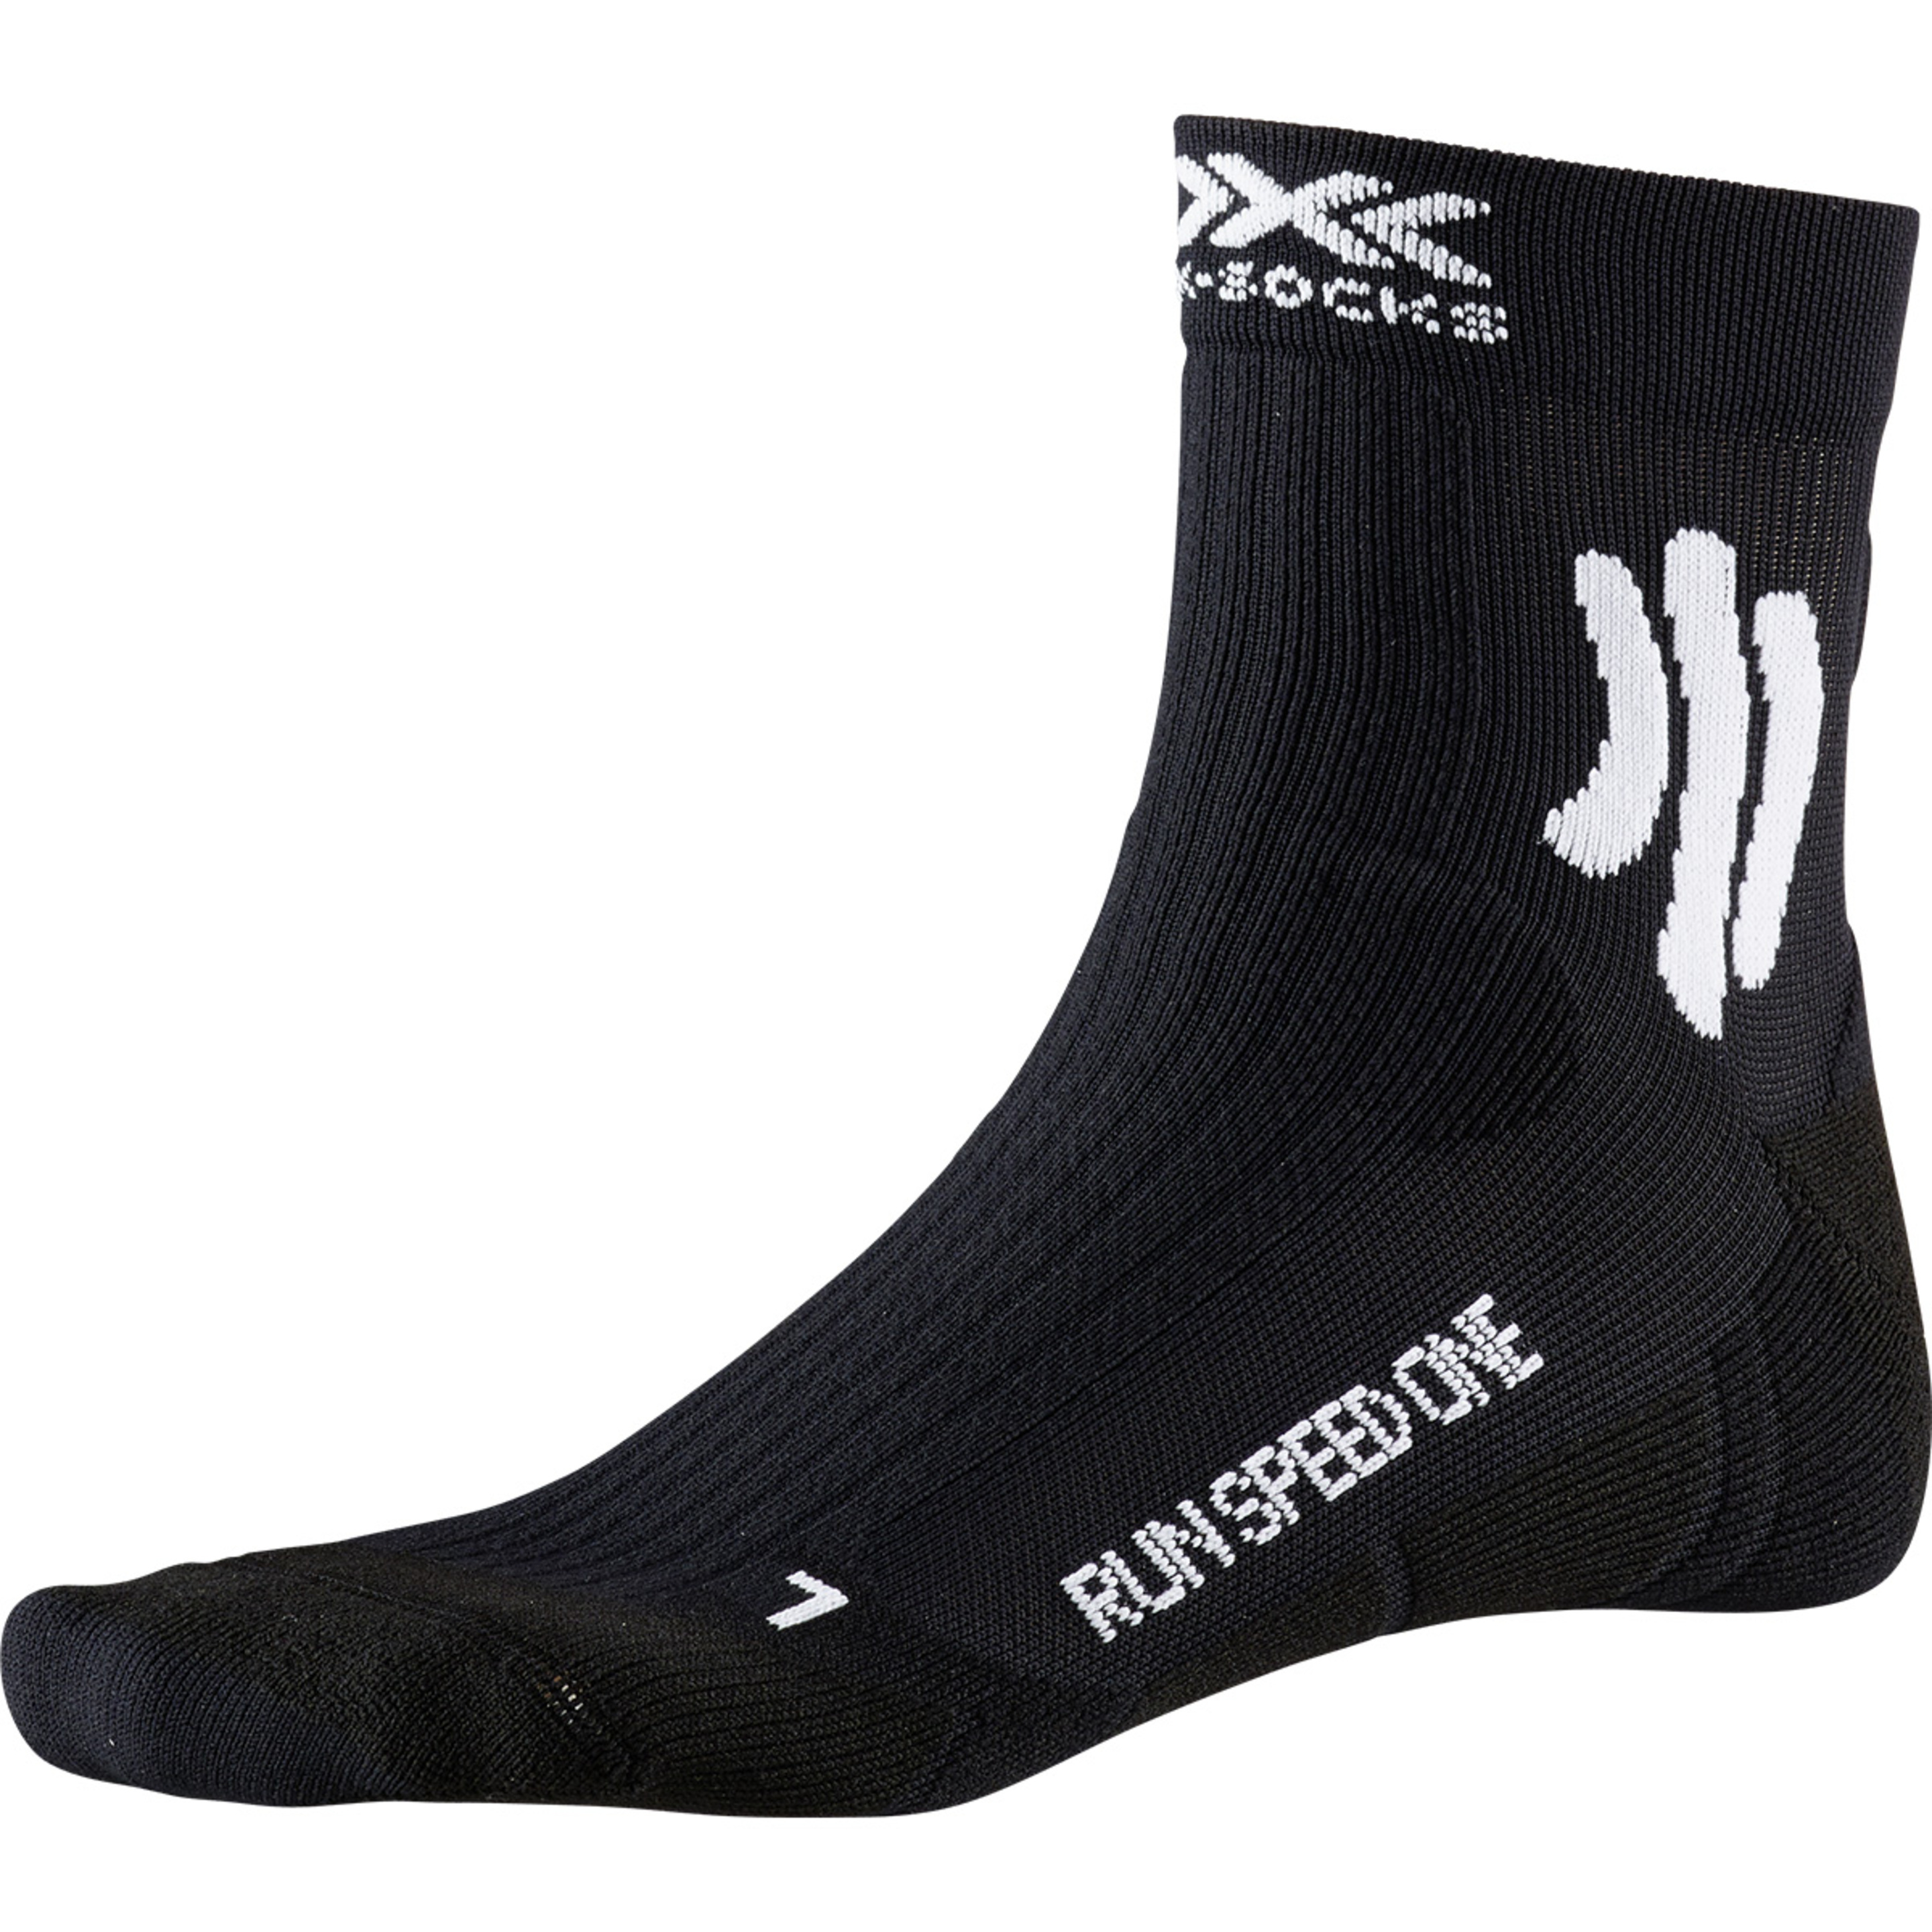 Calcetin Run Speed One  X-socks - negro - 